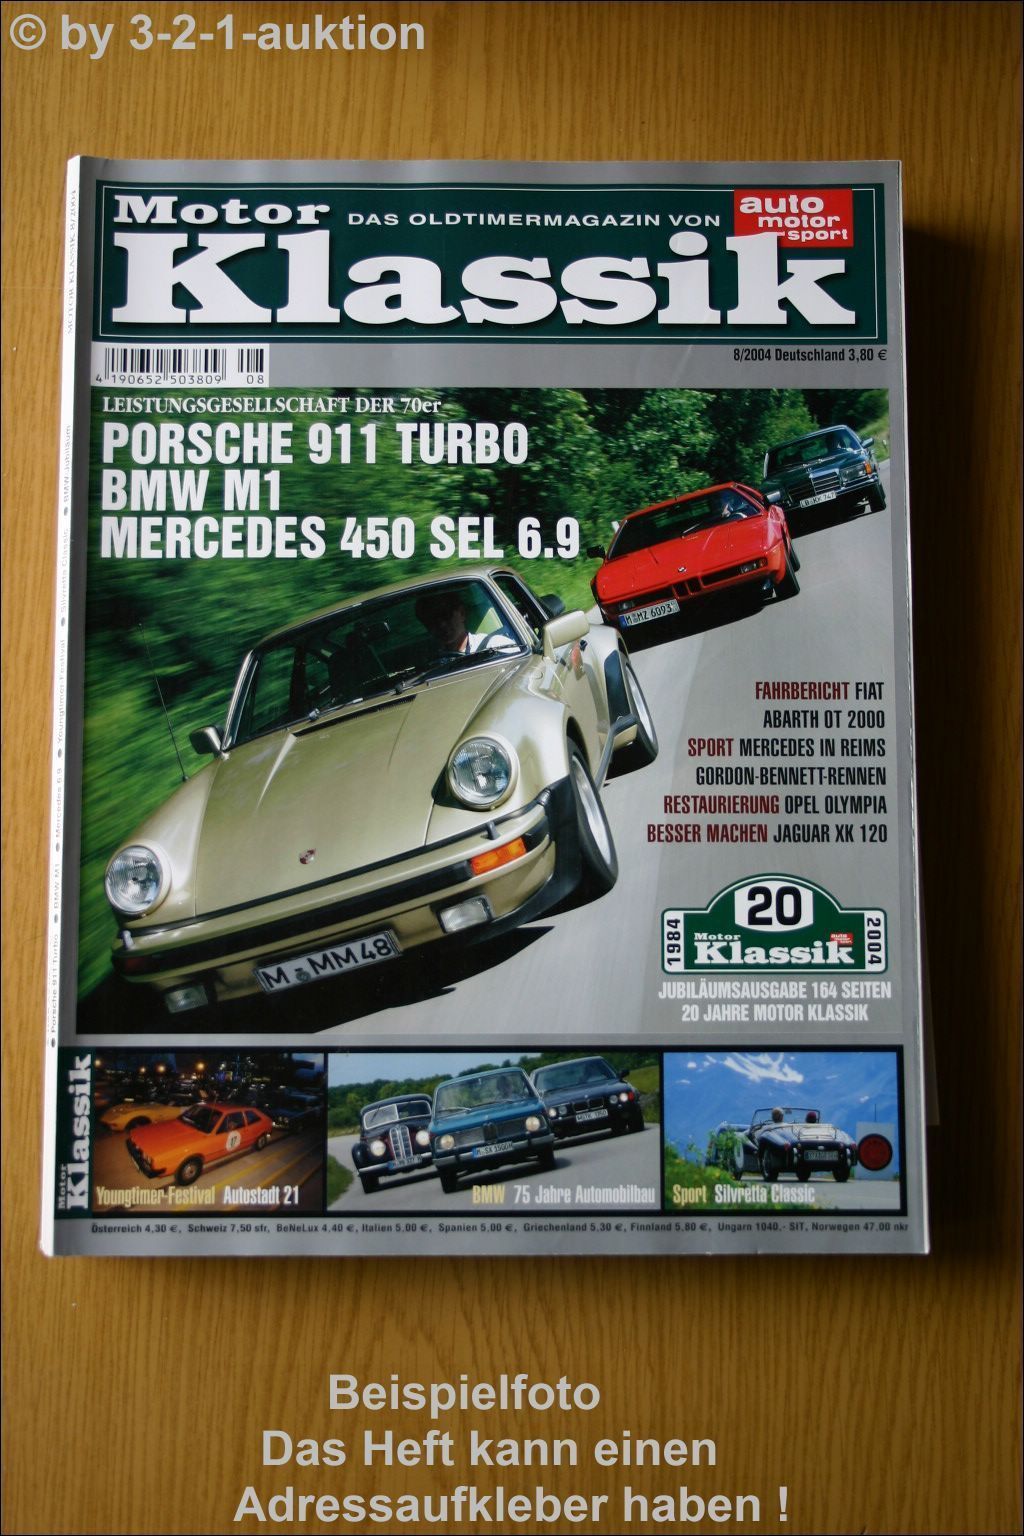 Motor Classic 8/04 Porsche Turbo Bmw M1 Mercedes 450 Sel 6.9